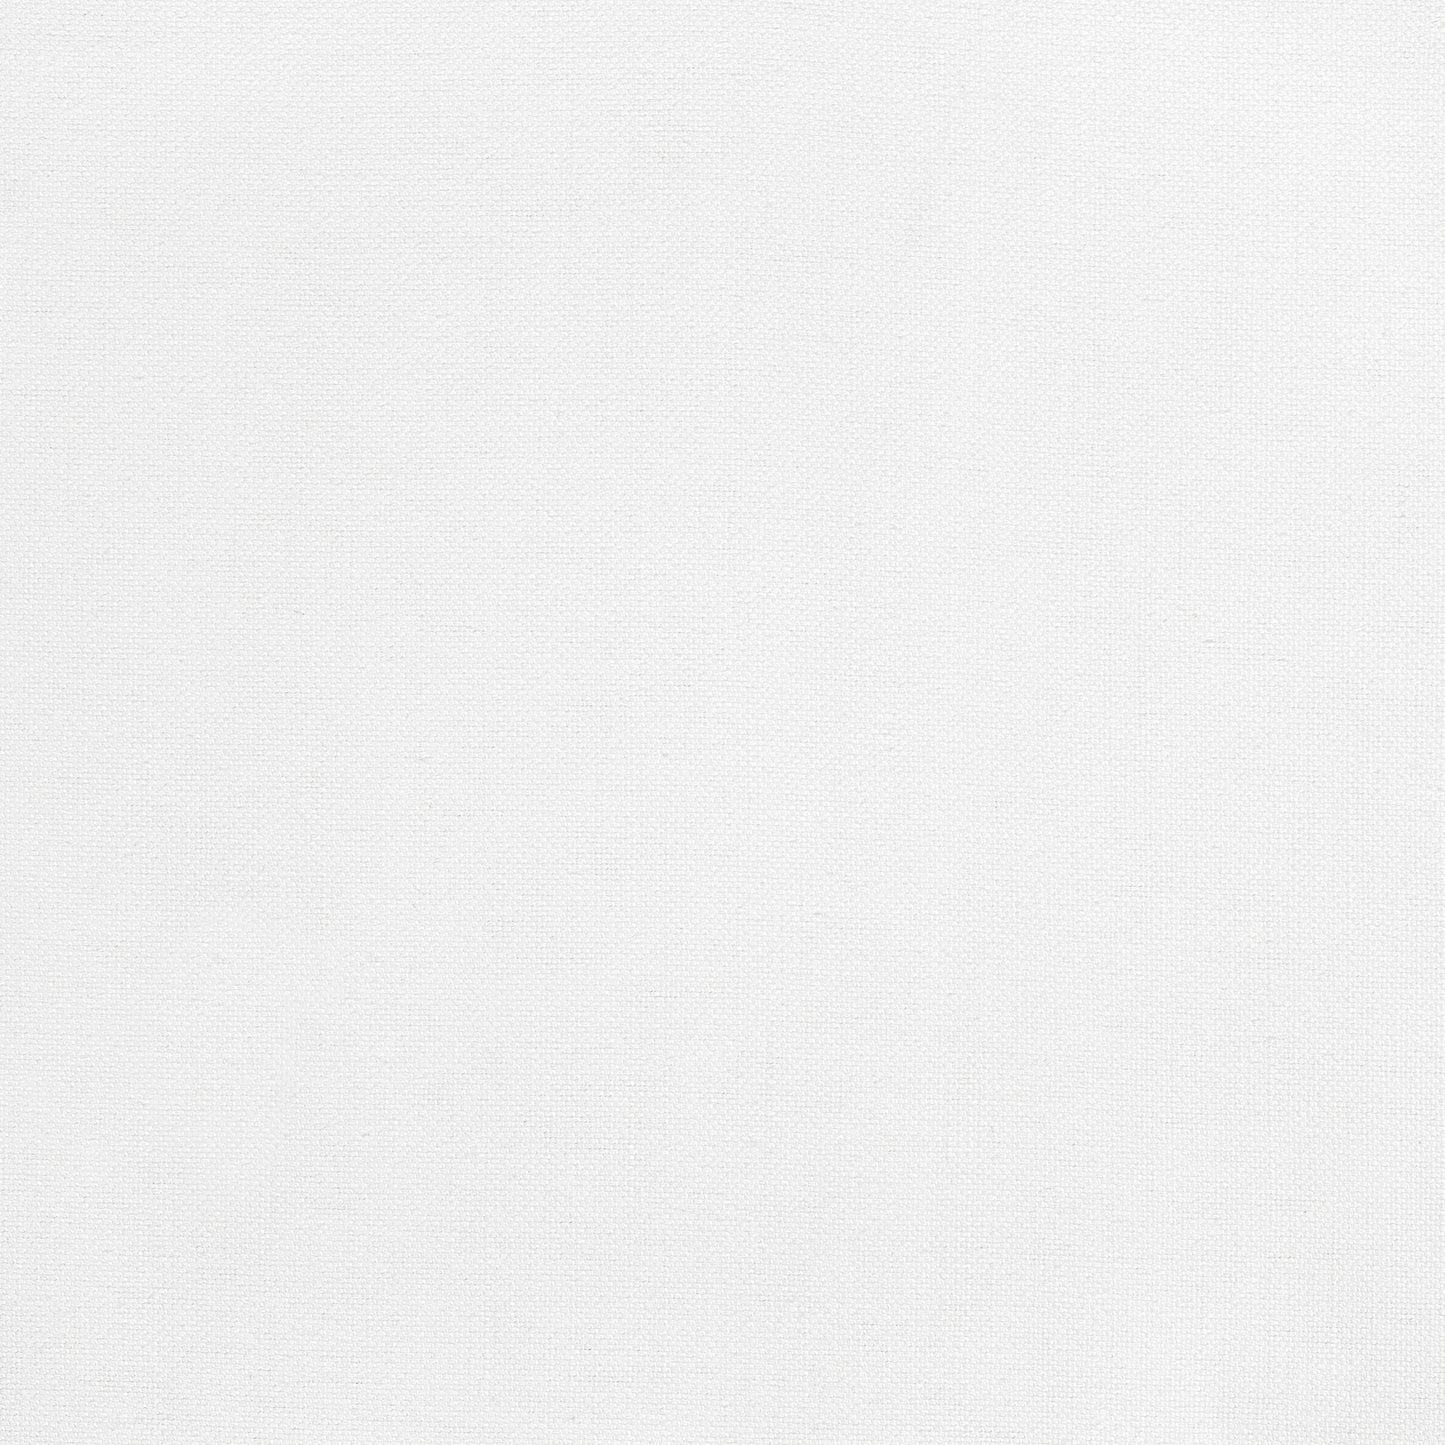 Textile sample linara 138 white close view 